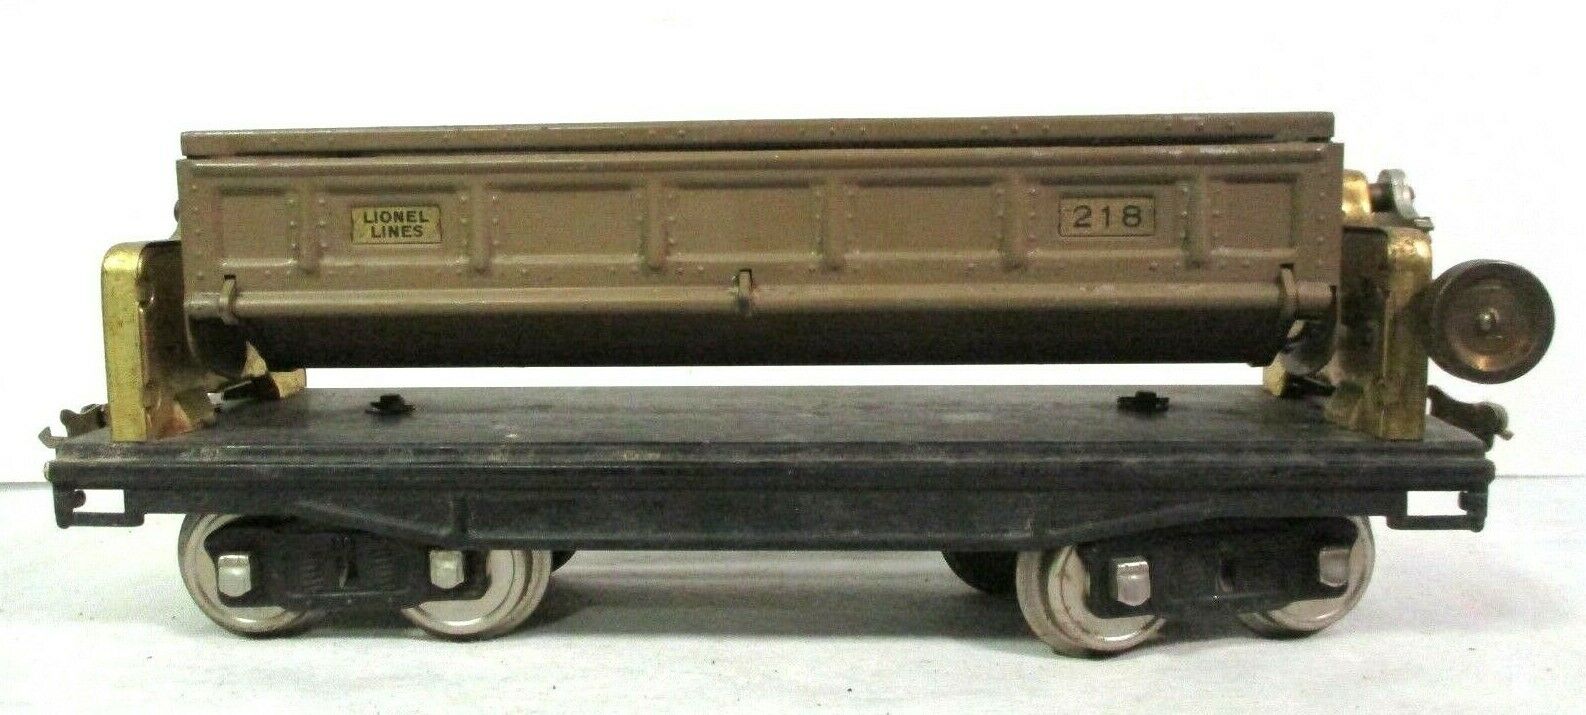 Lionel Lines # 218 Dump Car Mohave Prewar Standard Vintage Model Freight B56-12